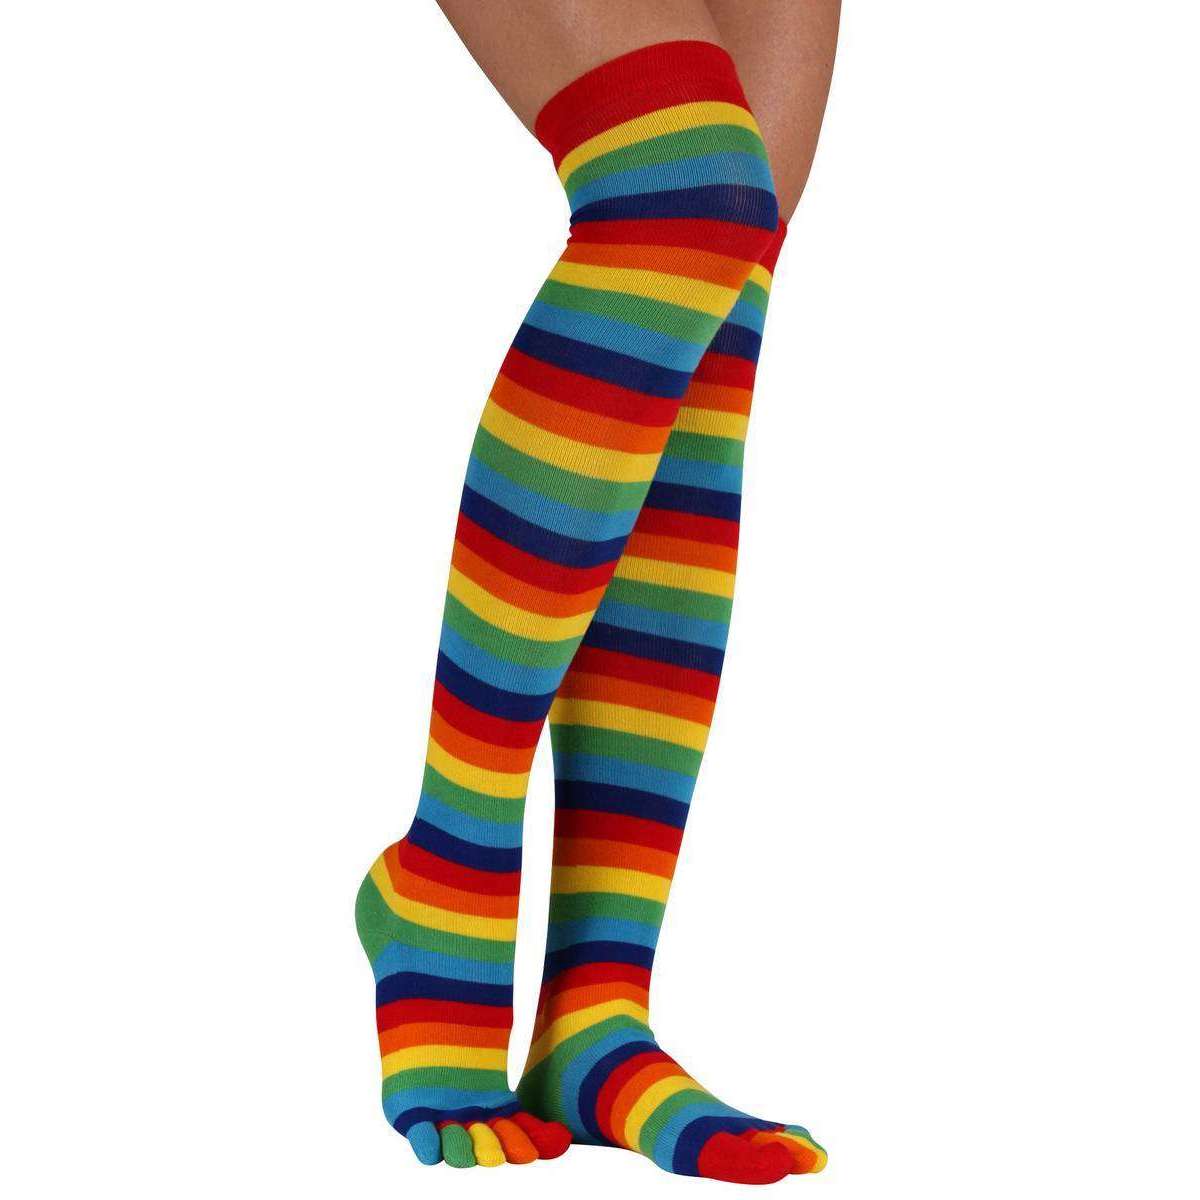 Toetoe Womens Multi Colour Striped Over The Knee Toe Socks Kj Beckett 